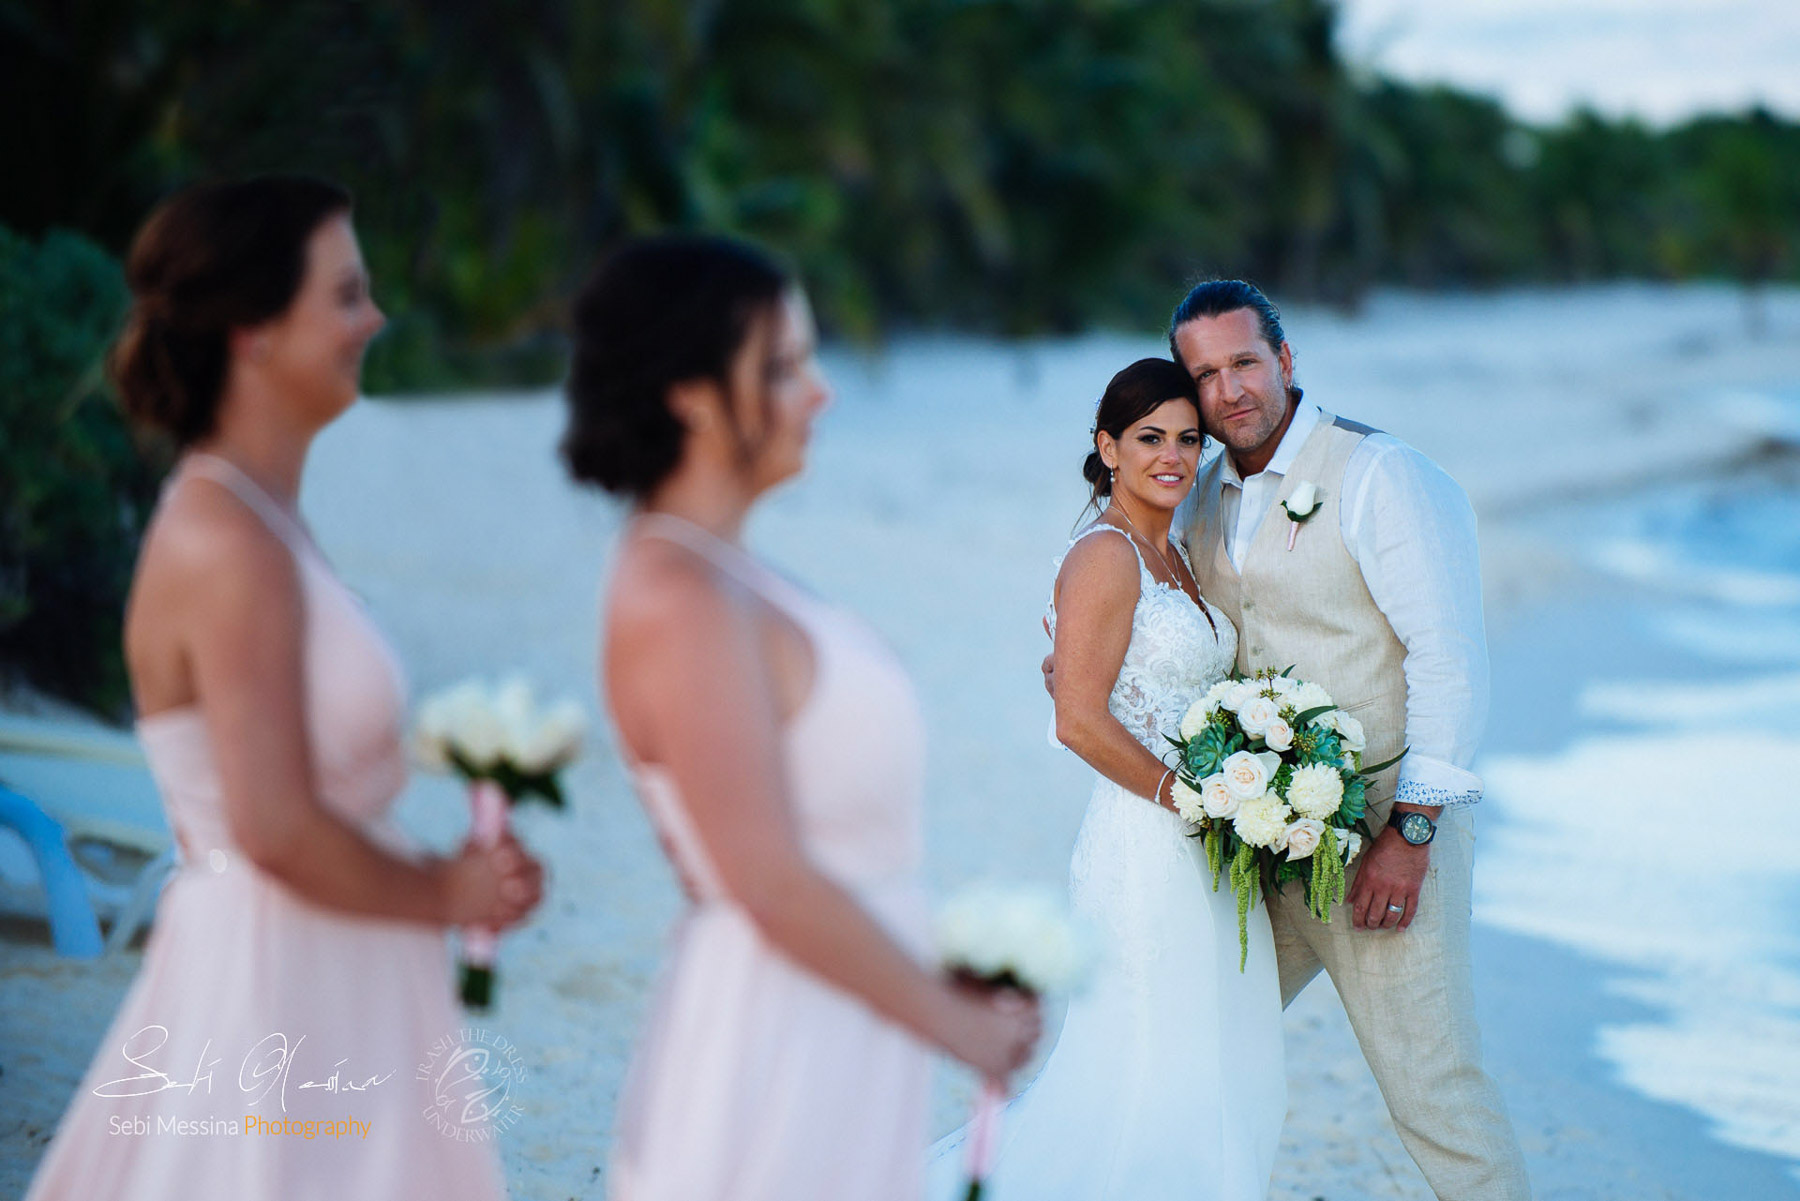 Group shots Wedding in Mexico – Sebi Messina Photography